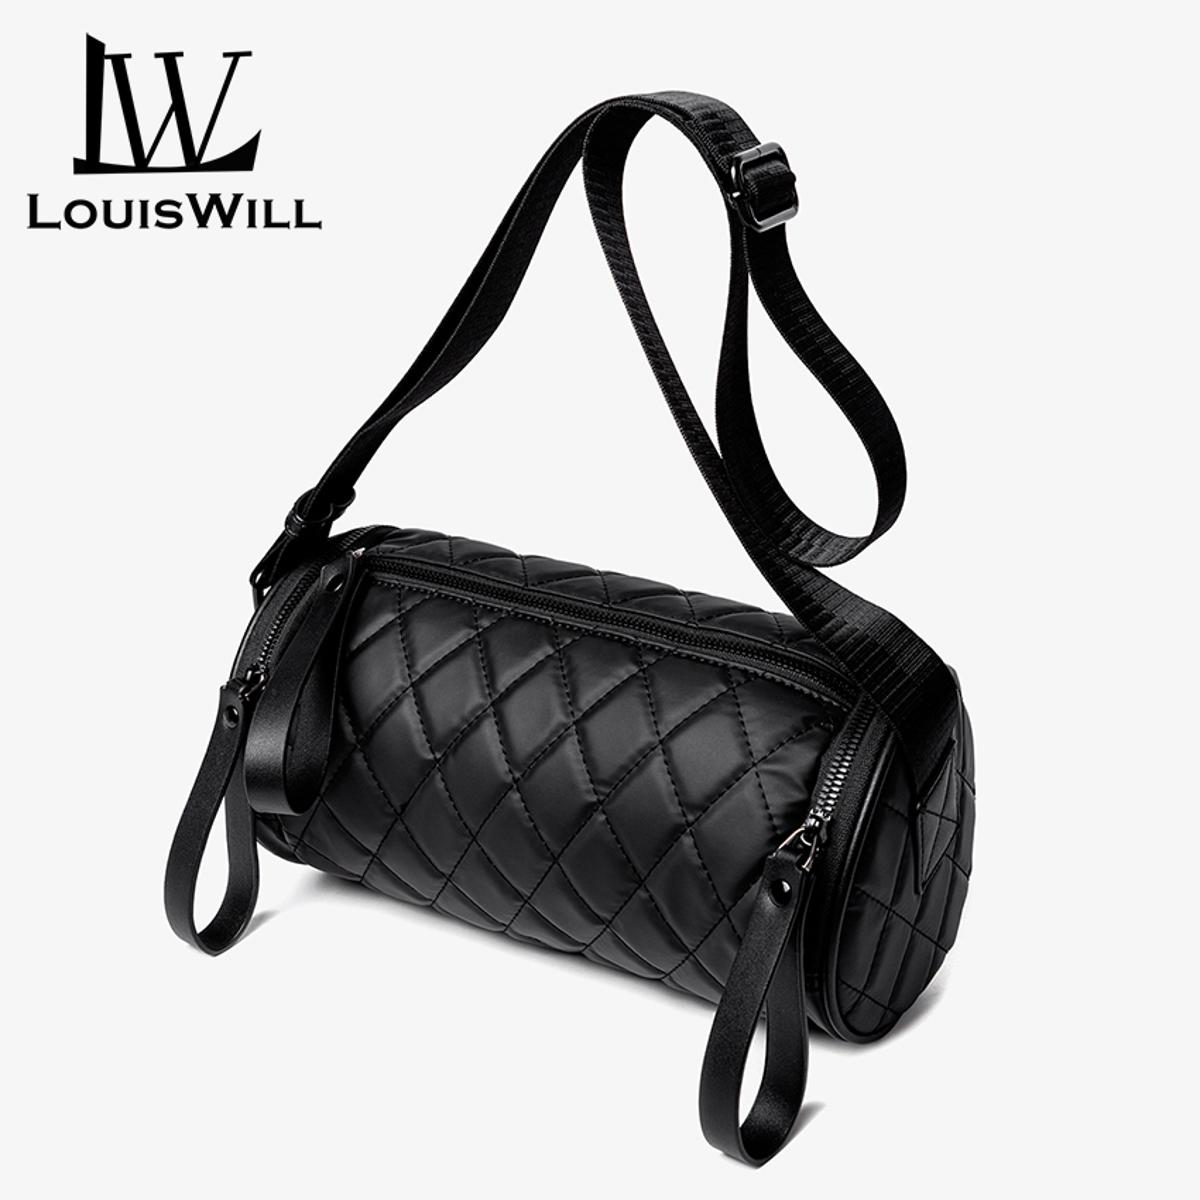 Buy Branded Luxury Designer Shoulder Bags for Women Online In India -  Luxepolis.com